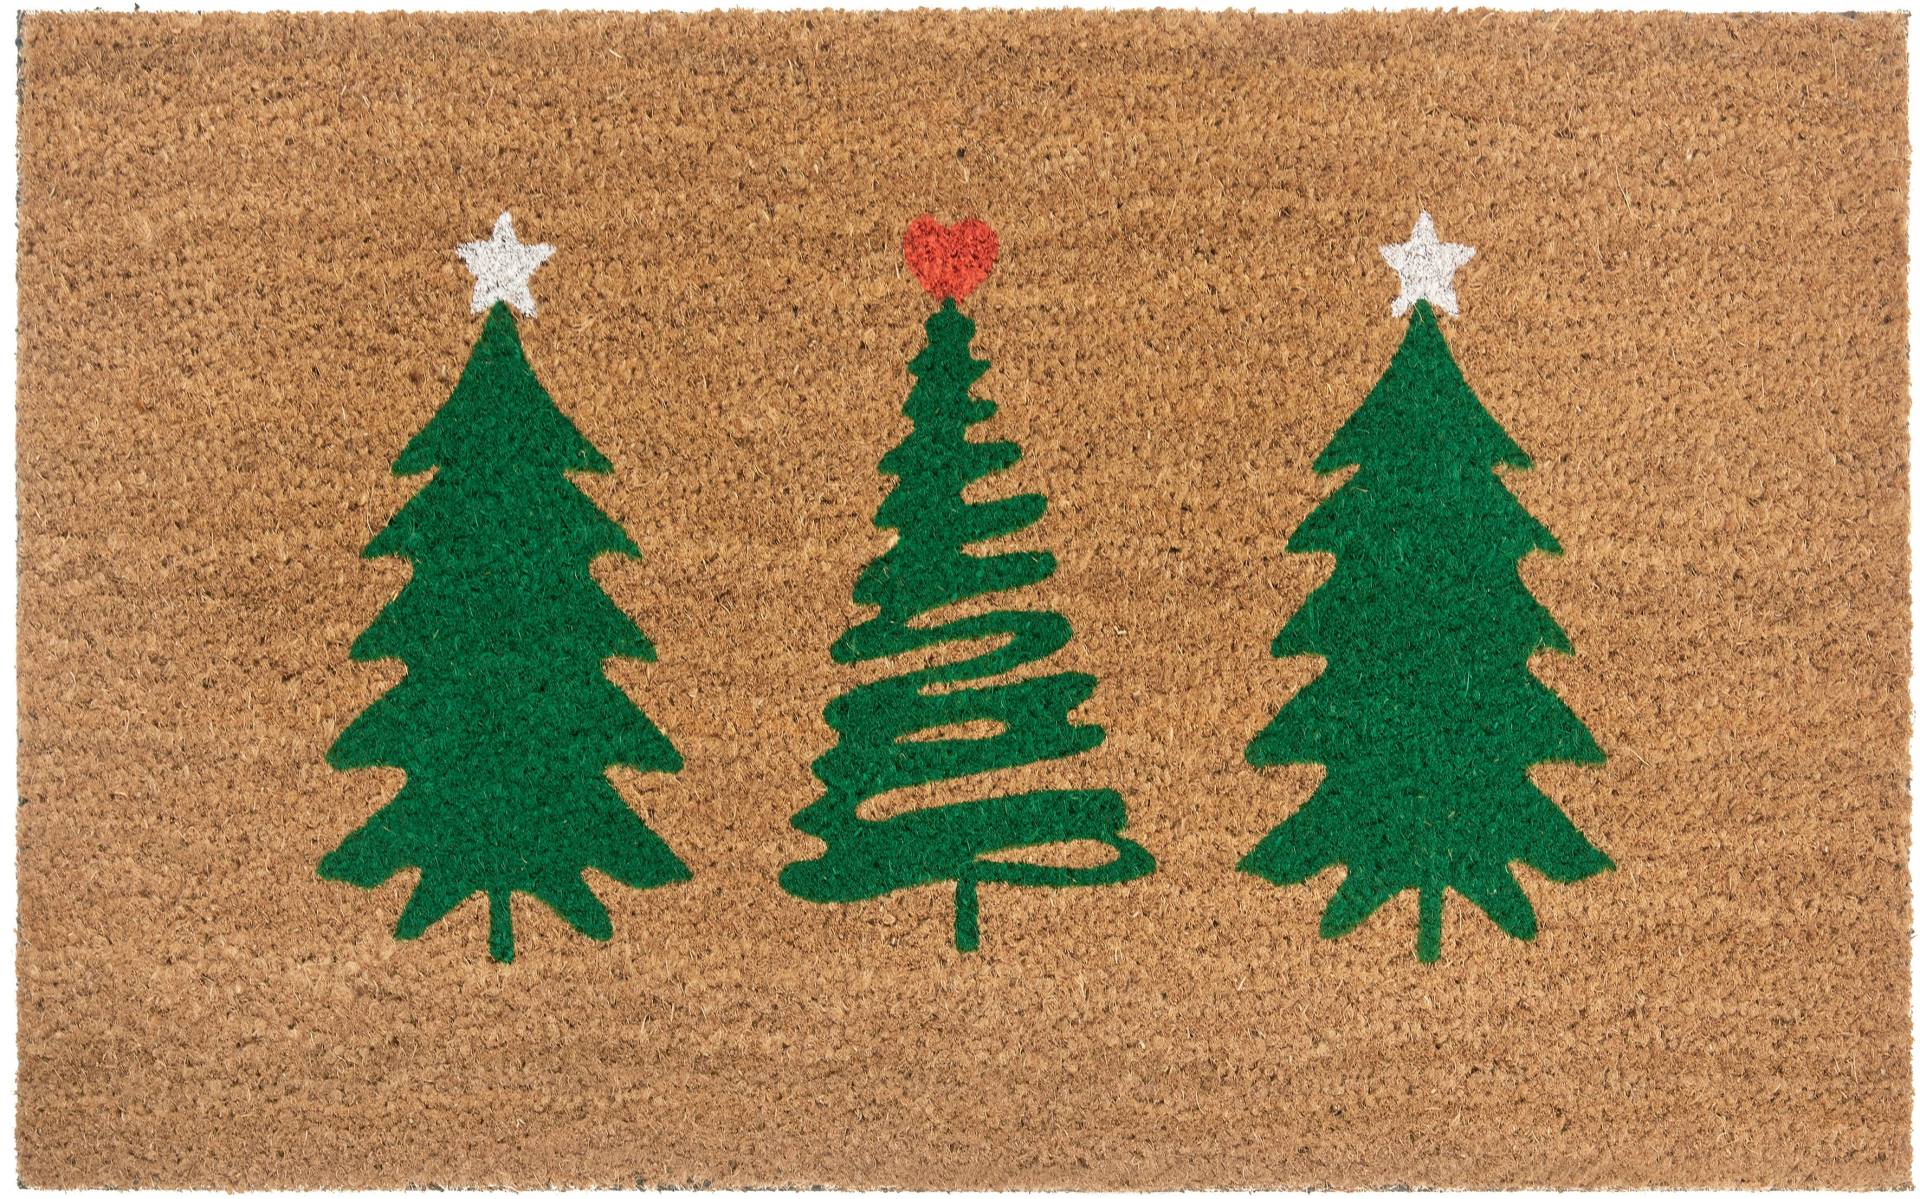 HANSE Home Fussmatte »Mix Mats Kokos Decorated Pine Trees«, rechteckig, Weihnachten, Schmutzfangmatte, Outdoor, Rutschfest, Innen, Kokosmatte von HANSE Home